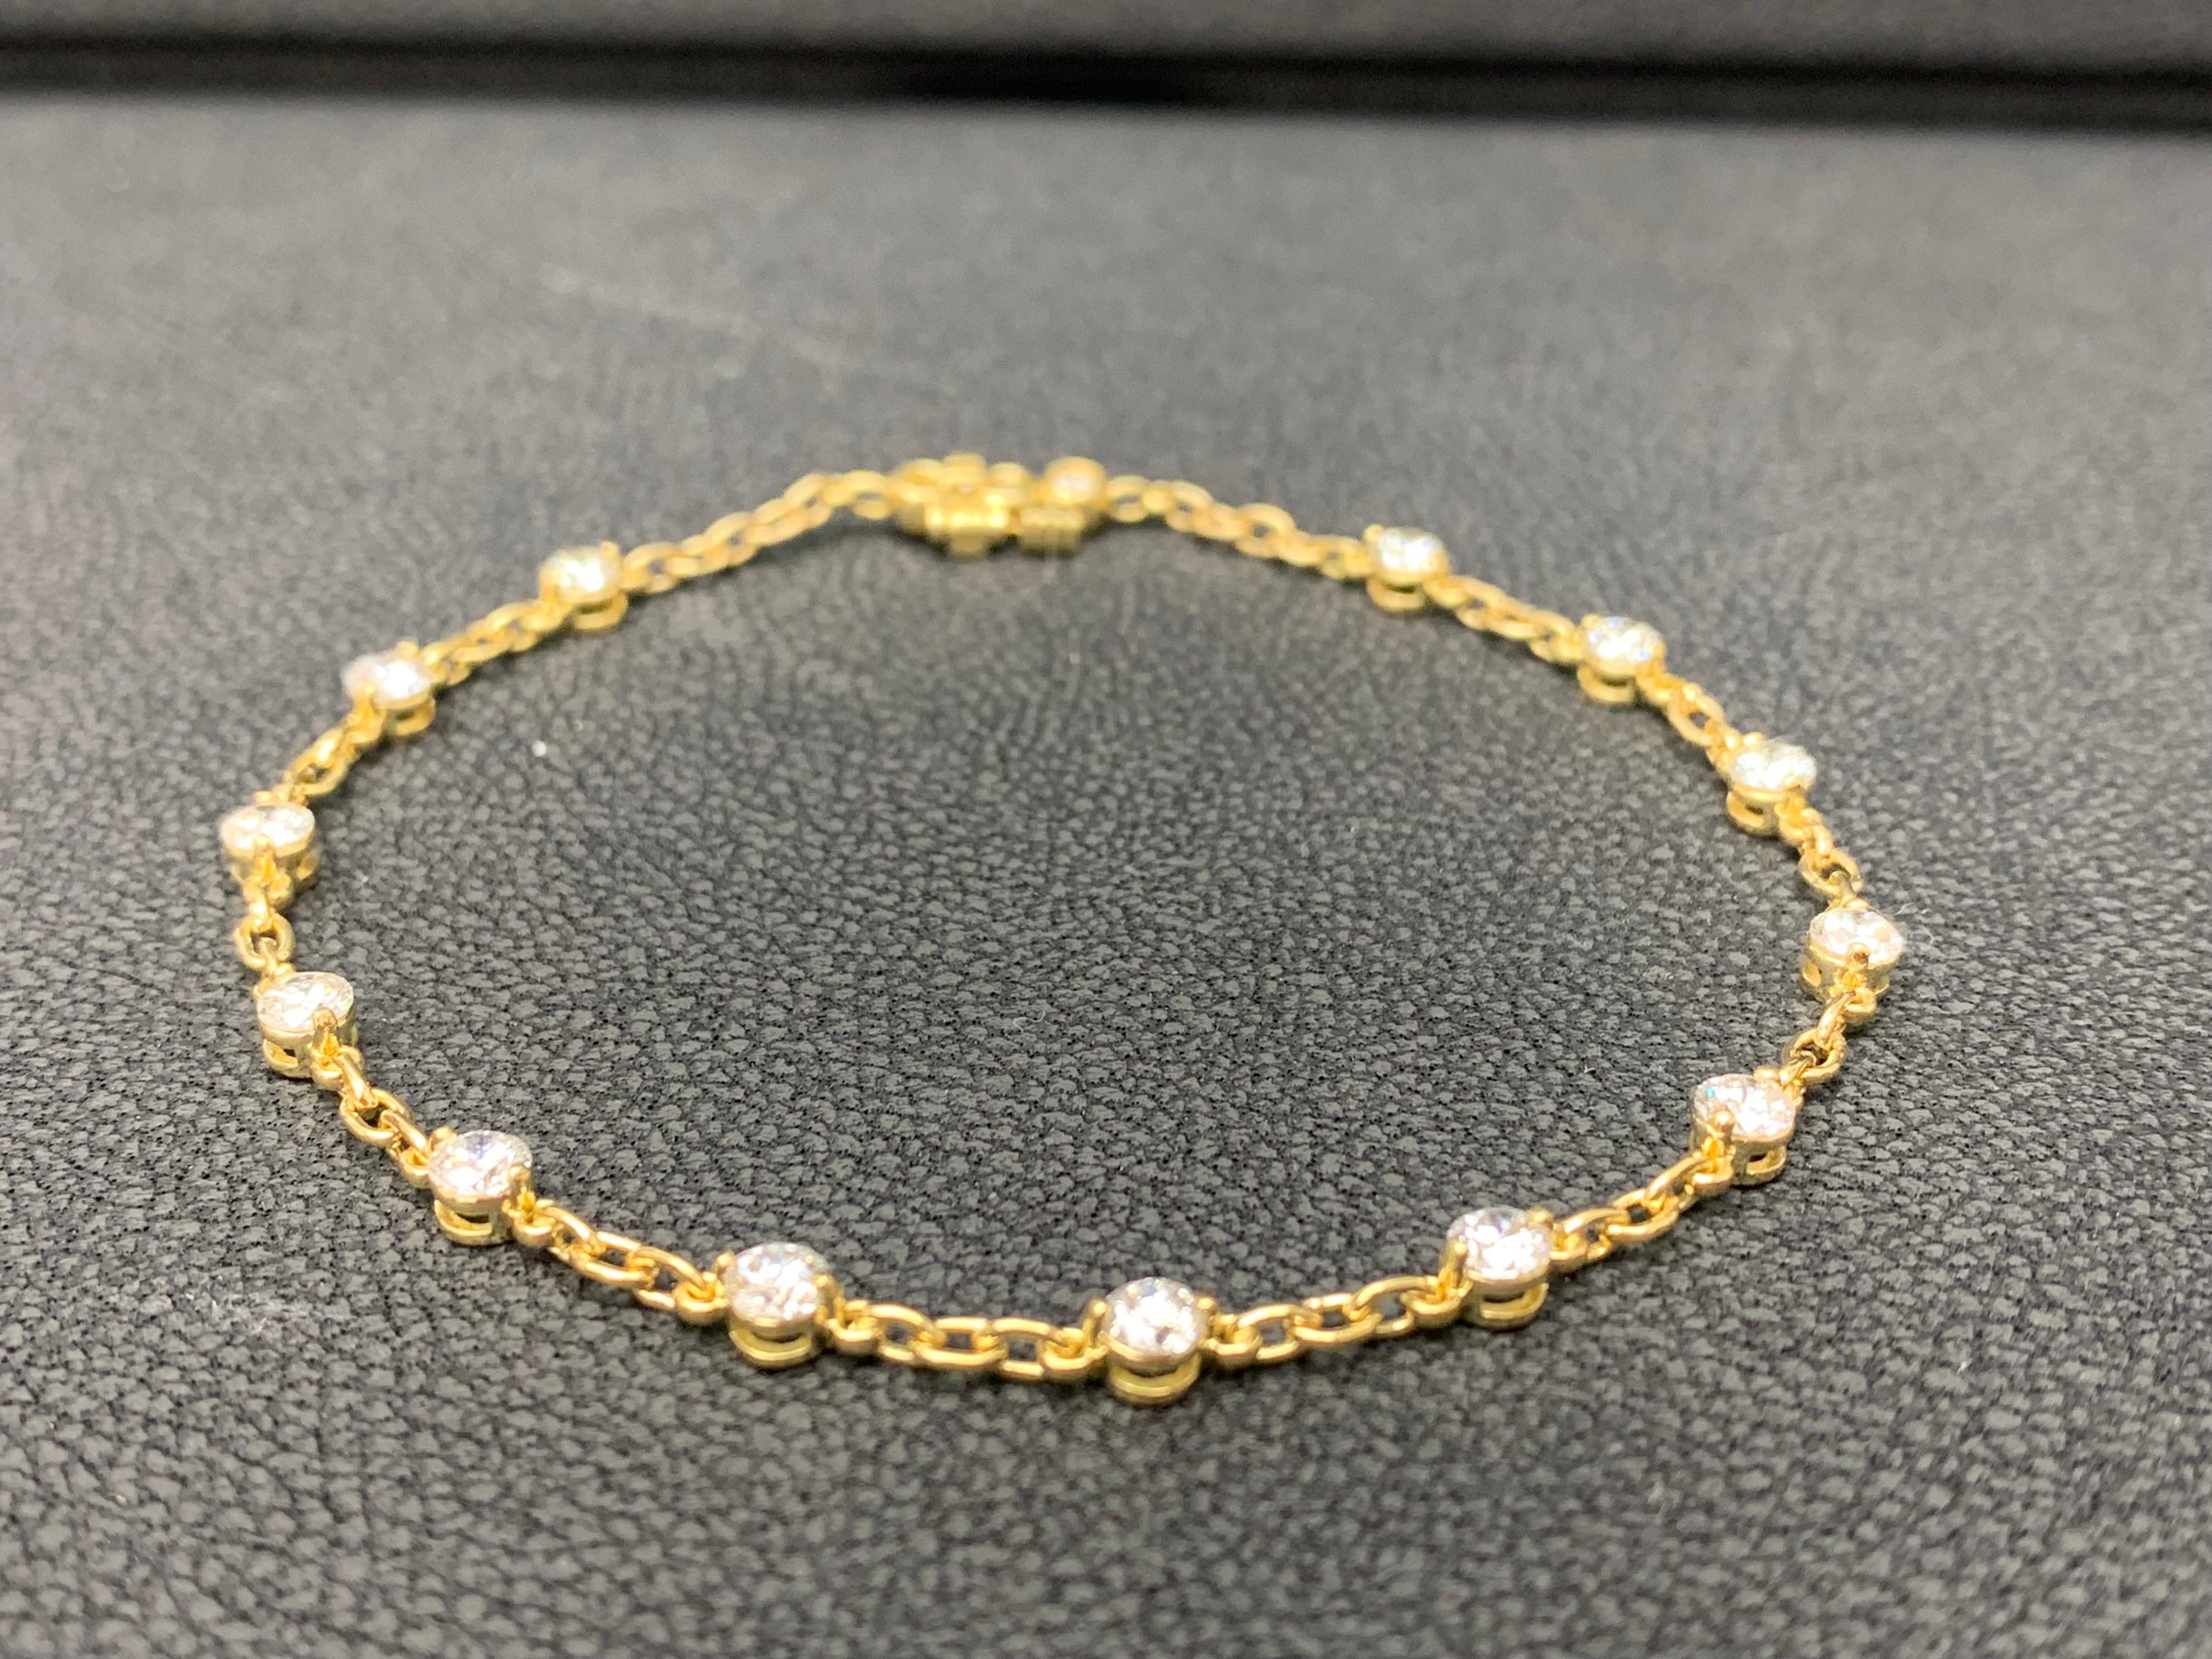 2.01 Carat Brilliant cut Diamond Chain Bracelet in 18K Yellow Gold For Sale 2